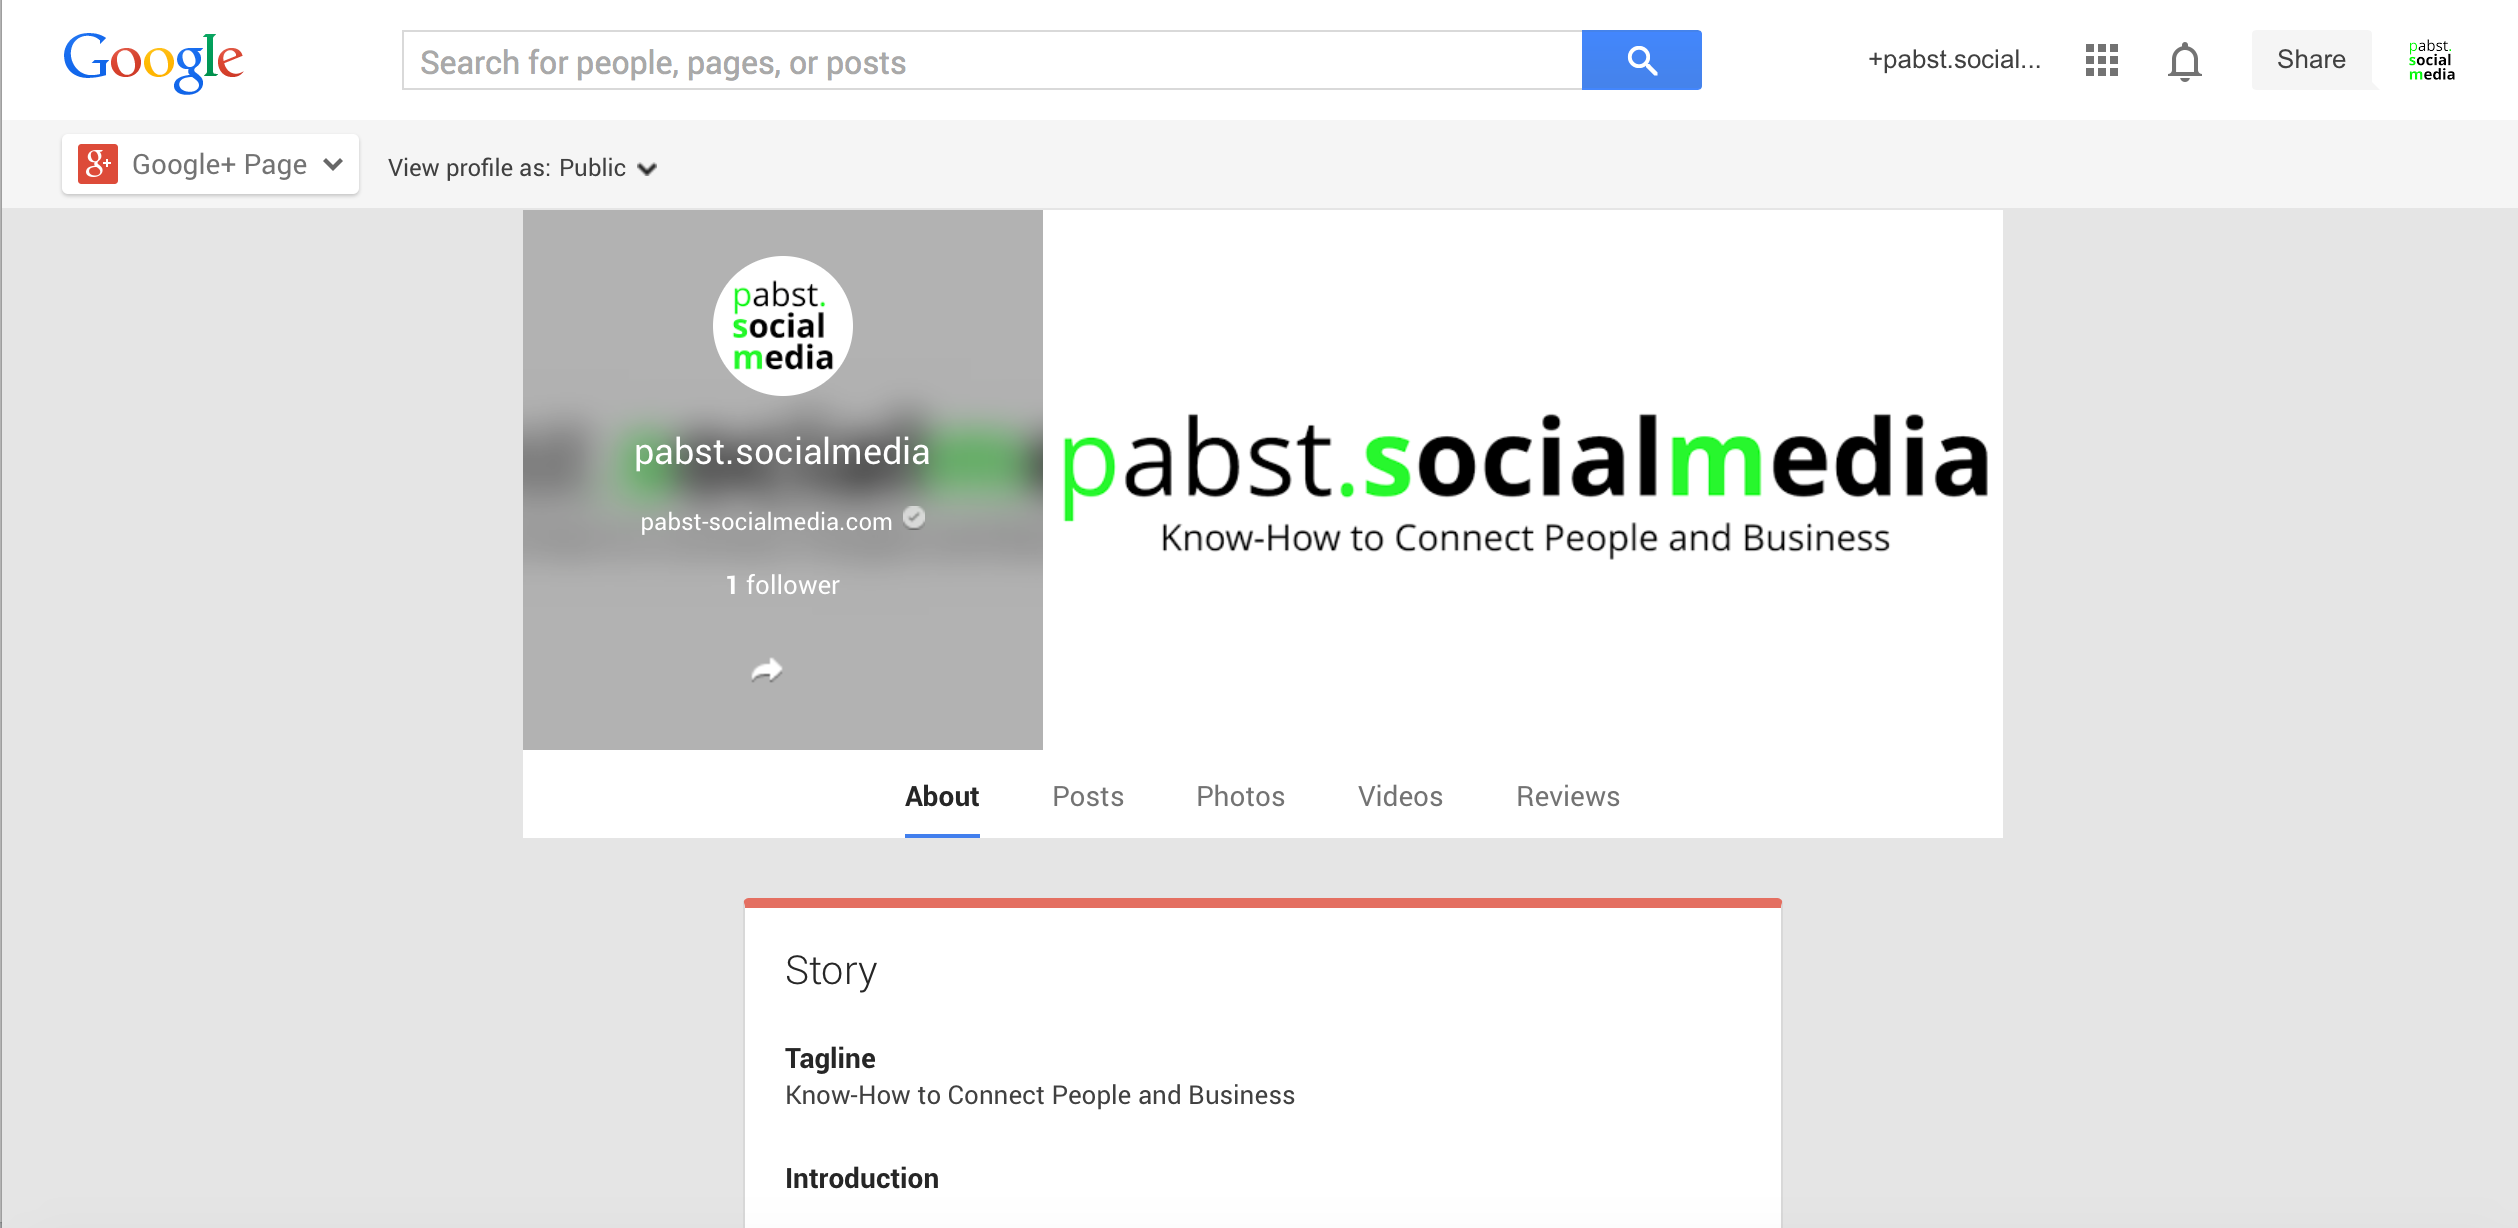 pabst.socialmedia on Google plus: +pabstsocialmediacom